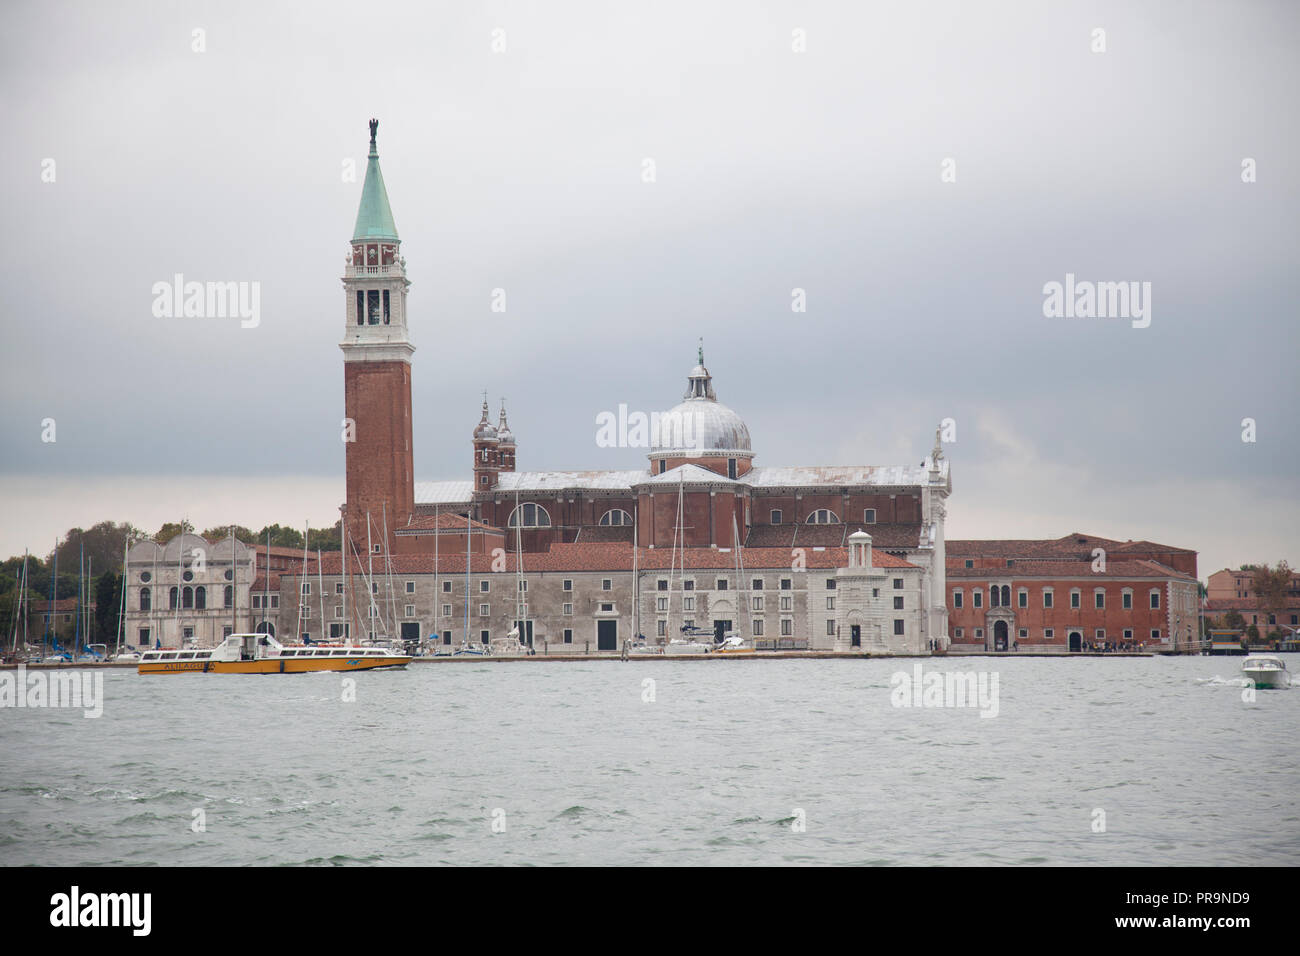 San Giorgio Maggiore (Venetian: San Zorzi Mazor) is one of the islands of Venice, northern Italy, lying east of the Giudecca and south of the main isl Stock Photo